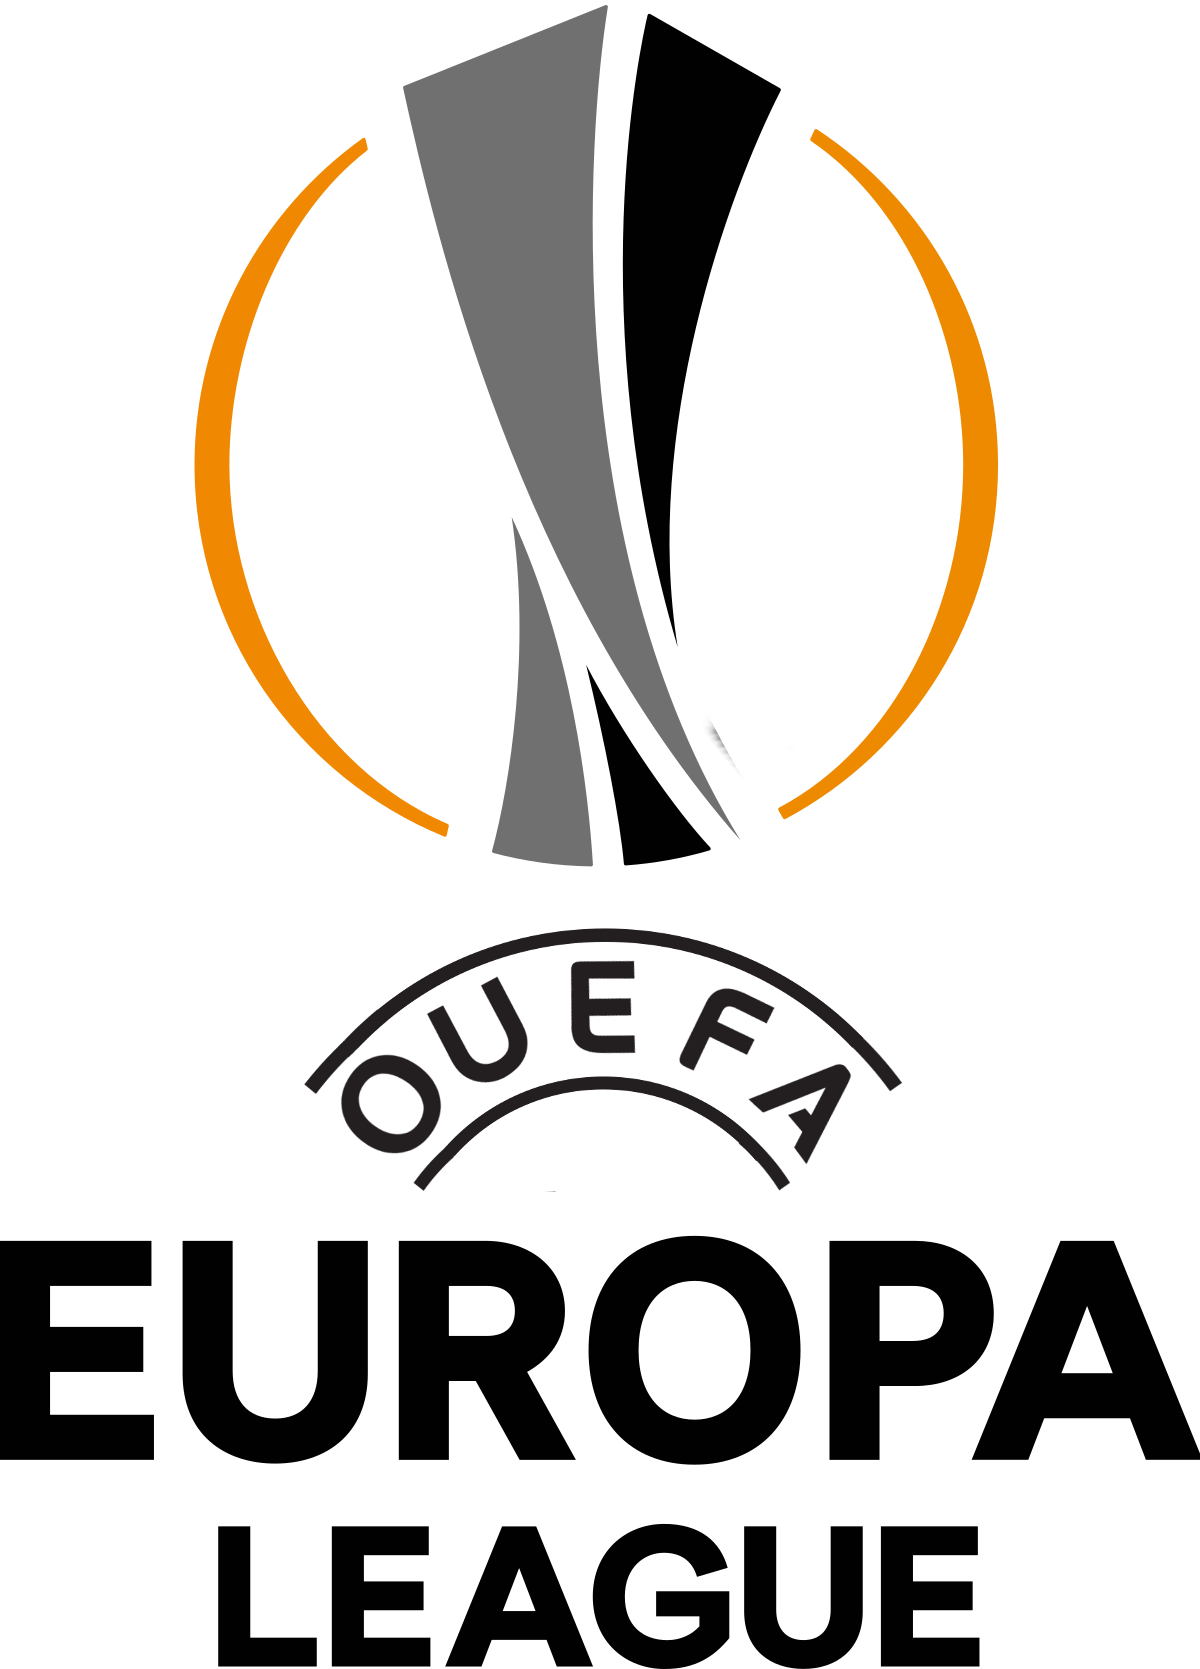 OUEFA Champions League / Europa League O8yzi4gg